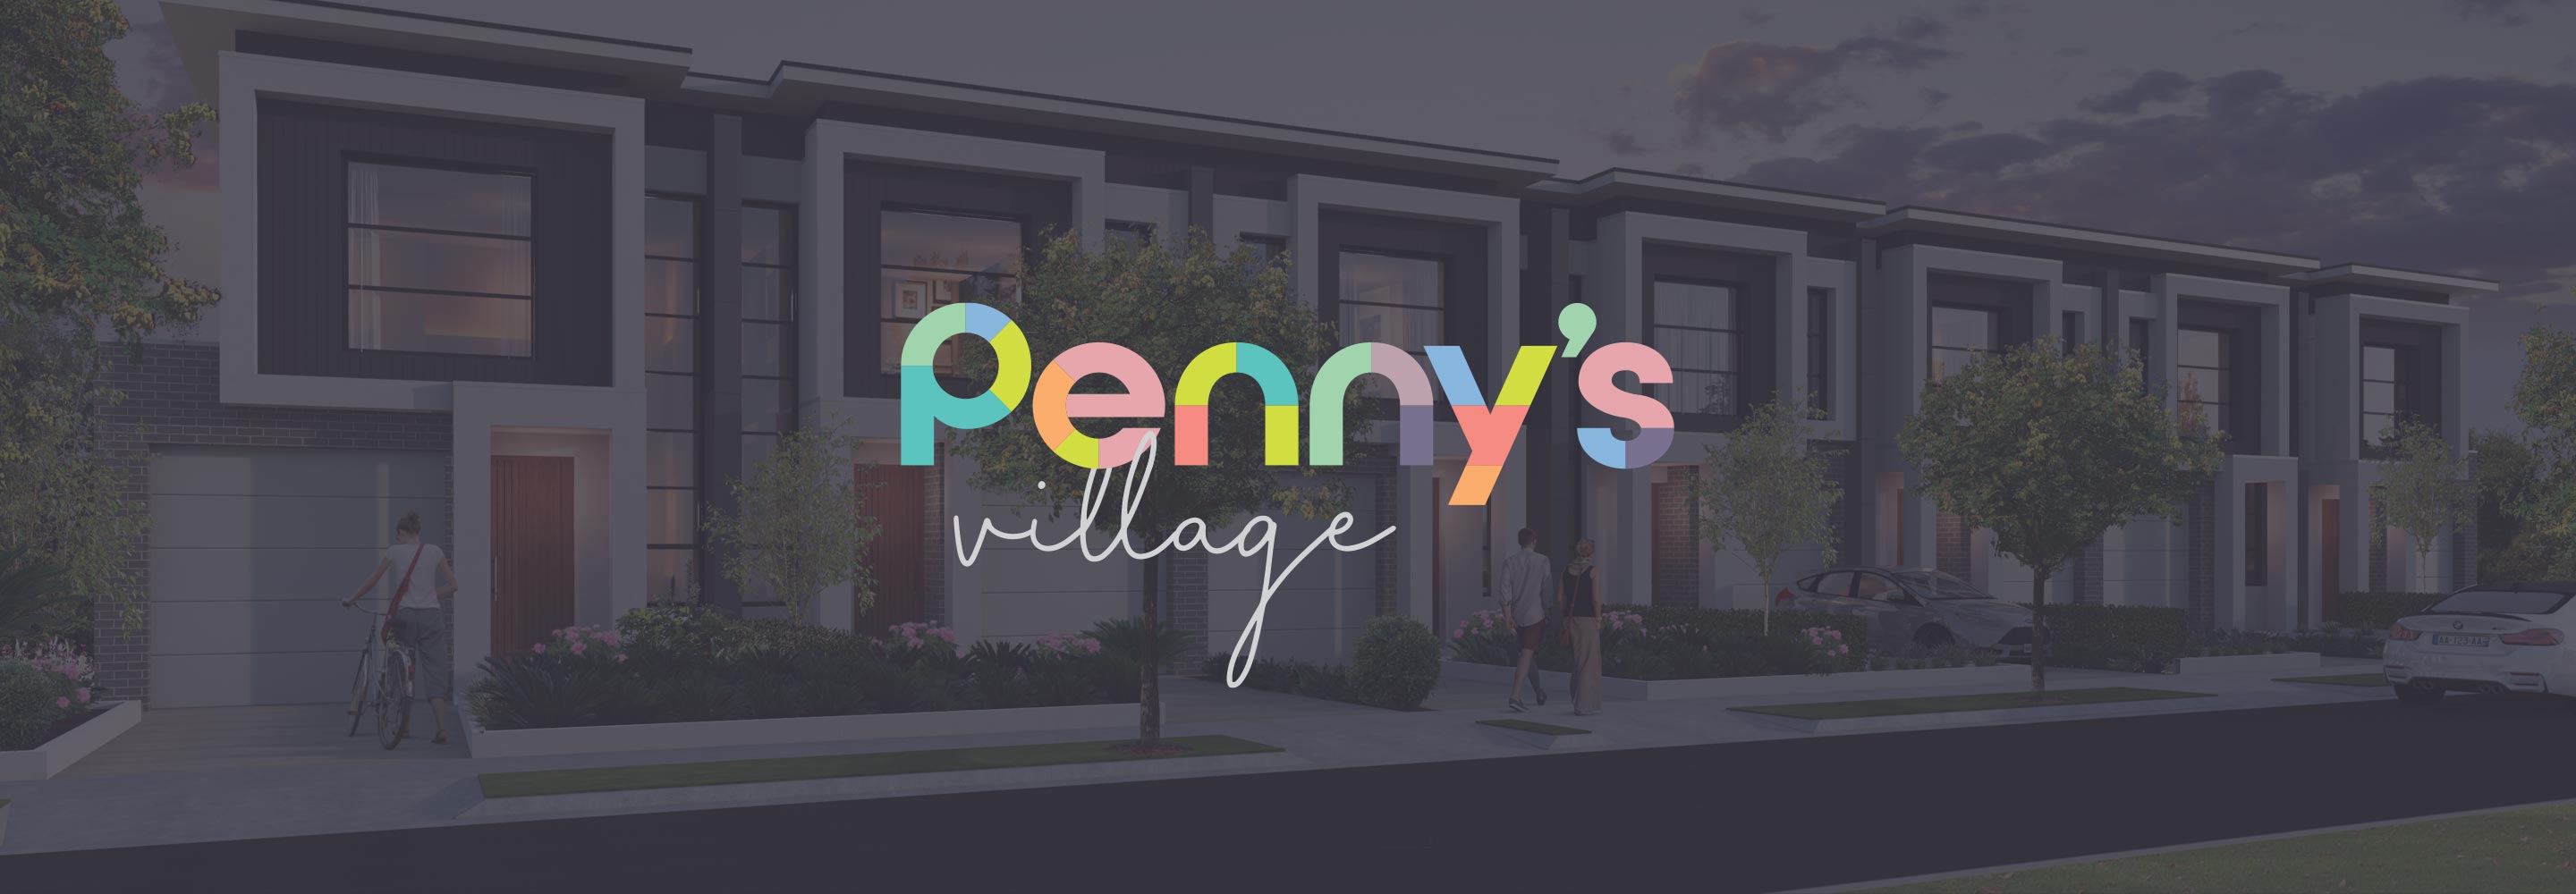 Penny's Village logo banner.